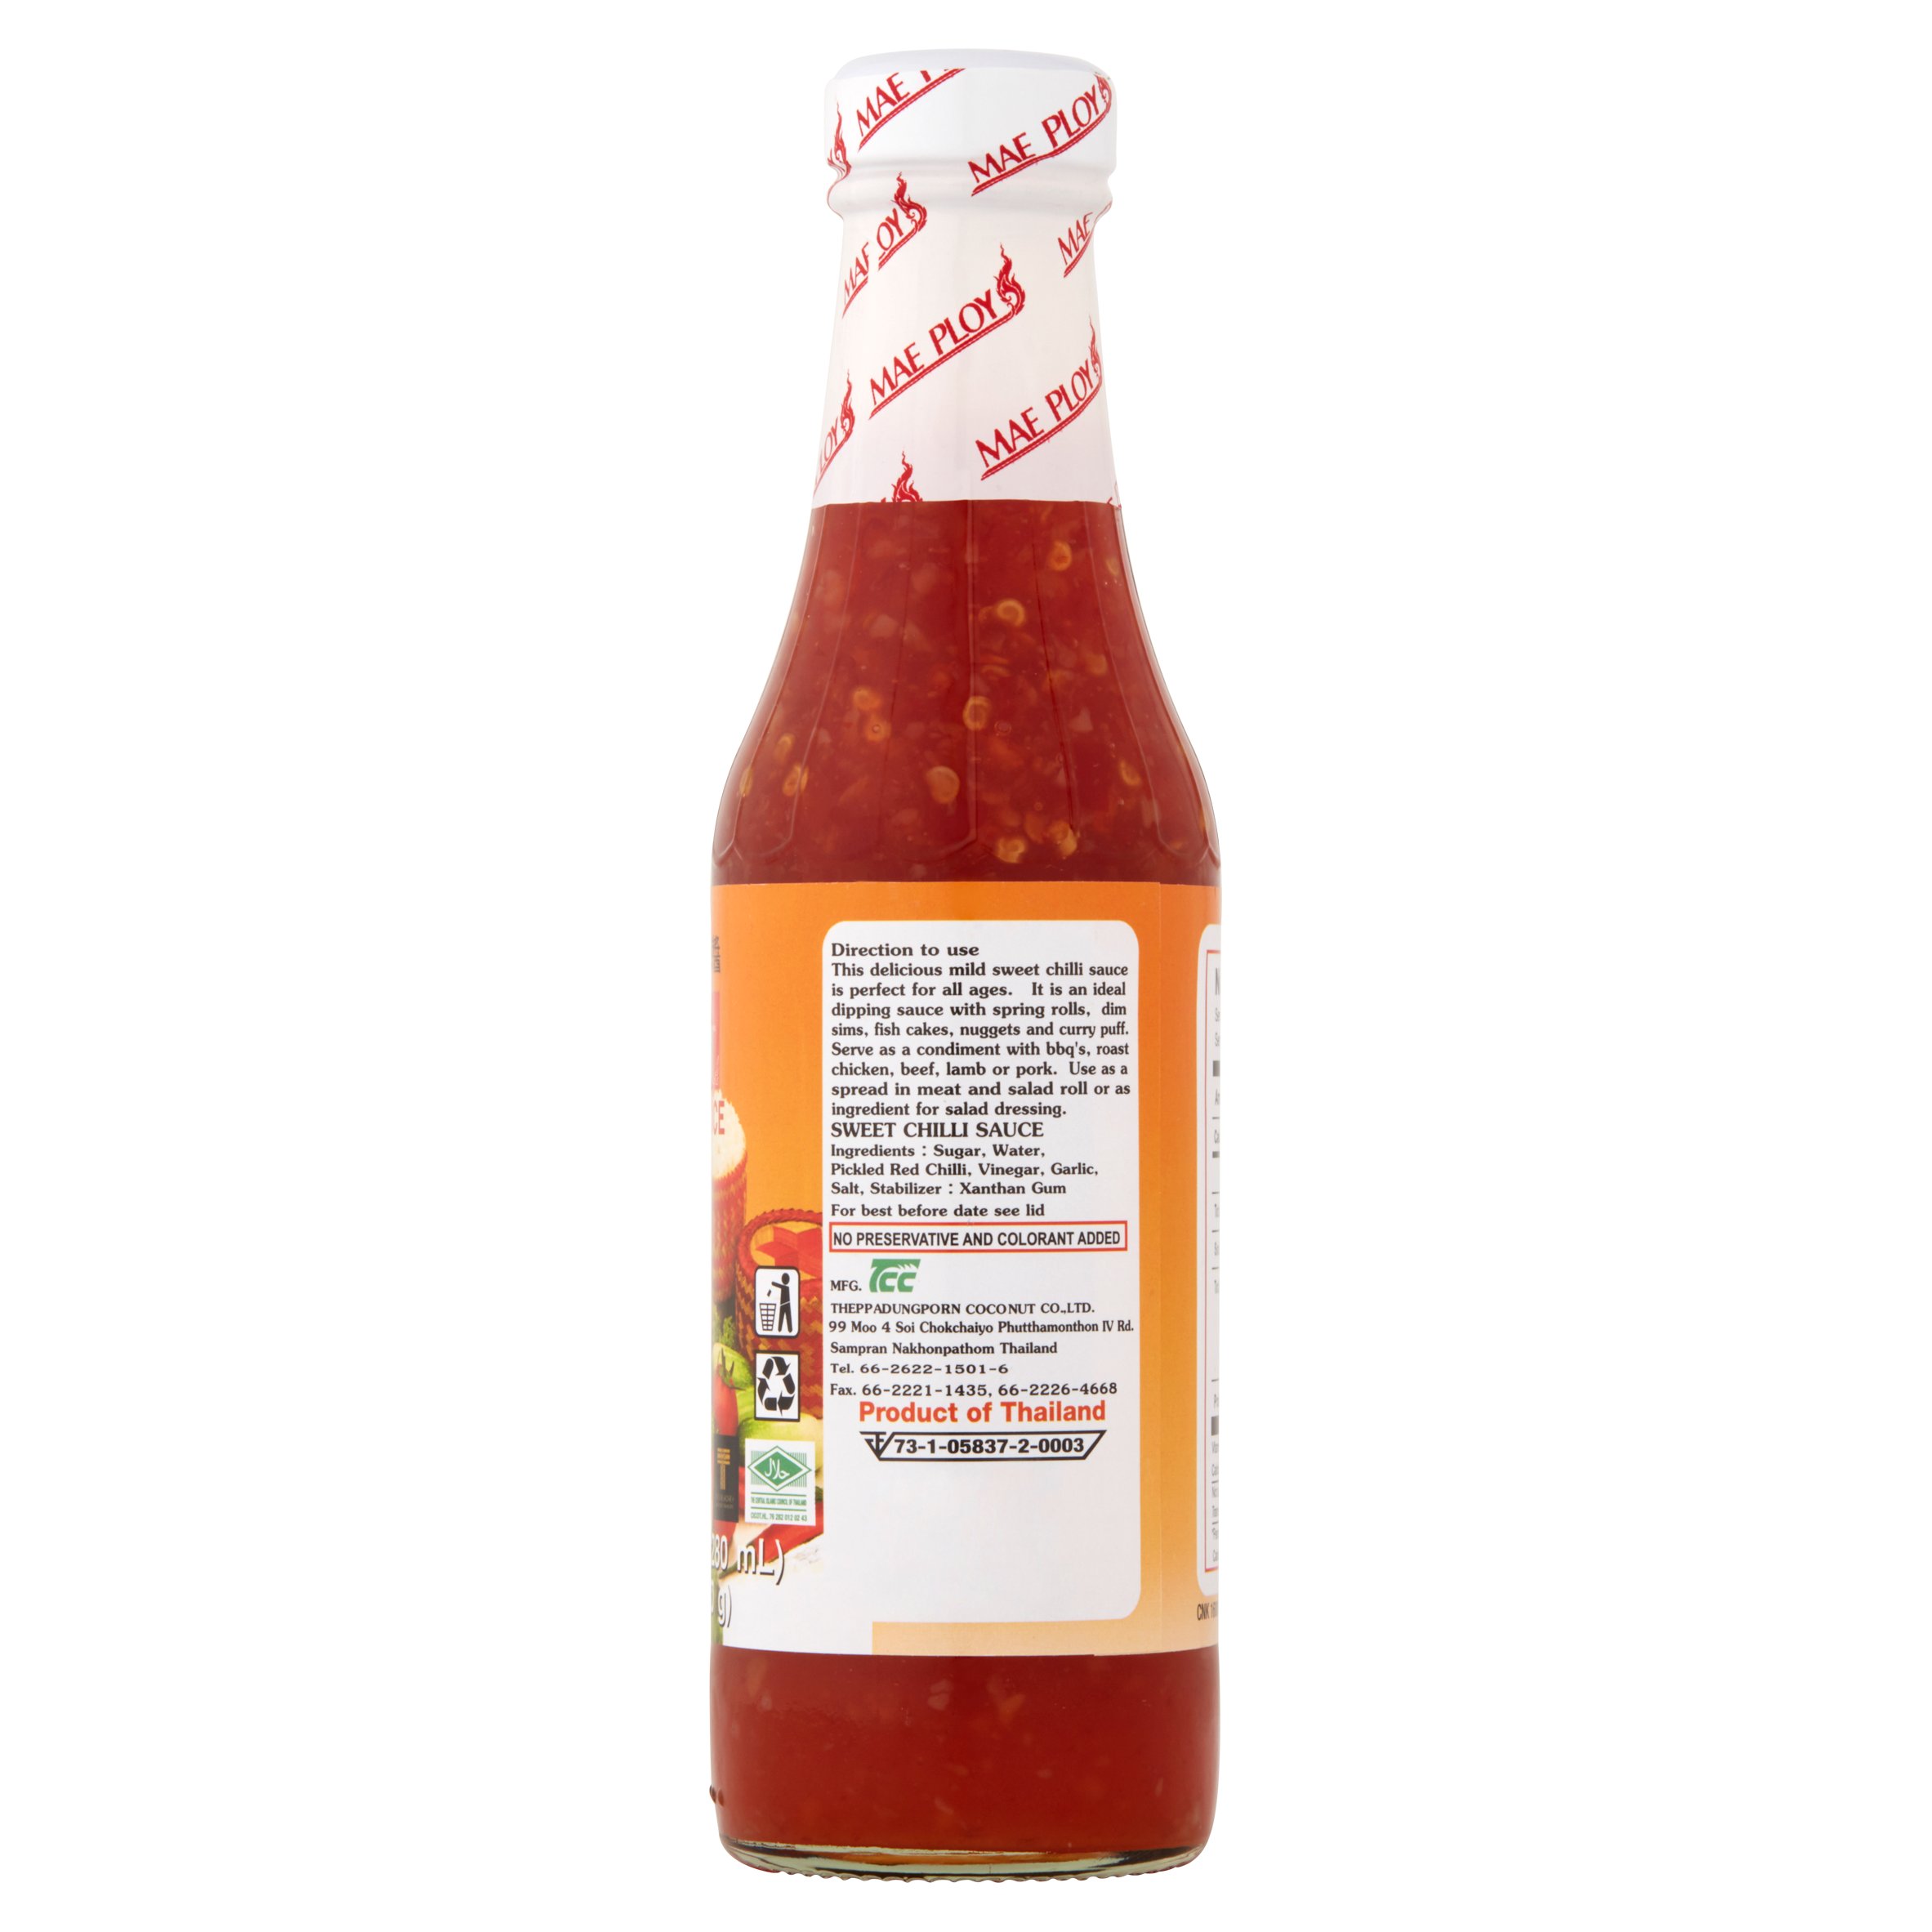 Mae Ploy Sweet Chili Sauce, 12 Oz - image 4 of 9